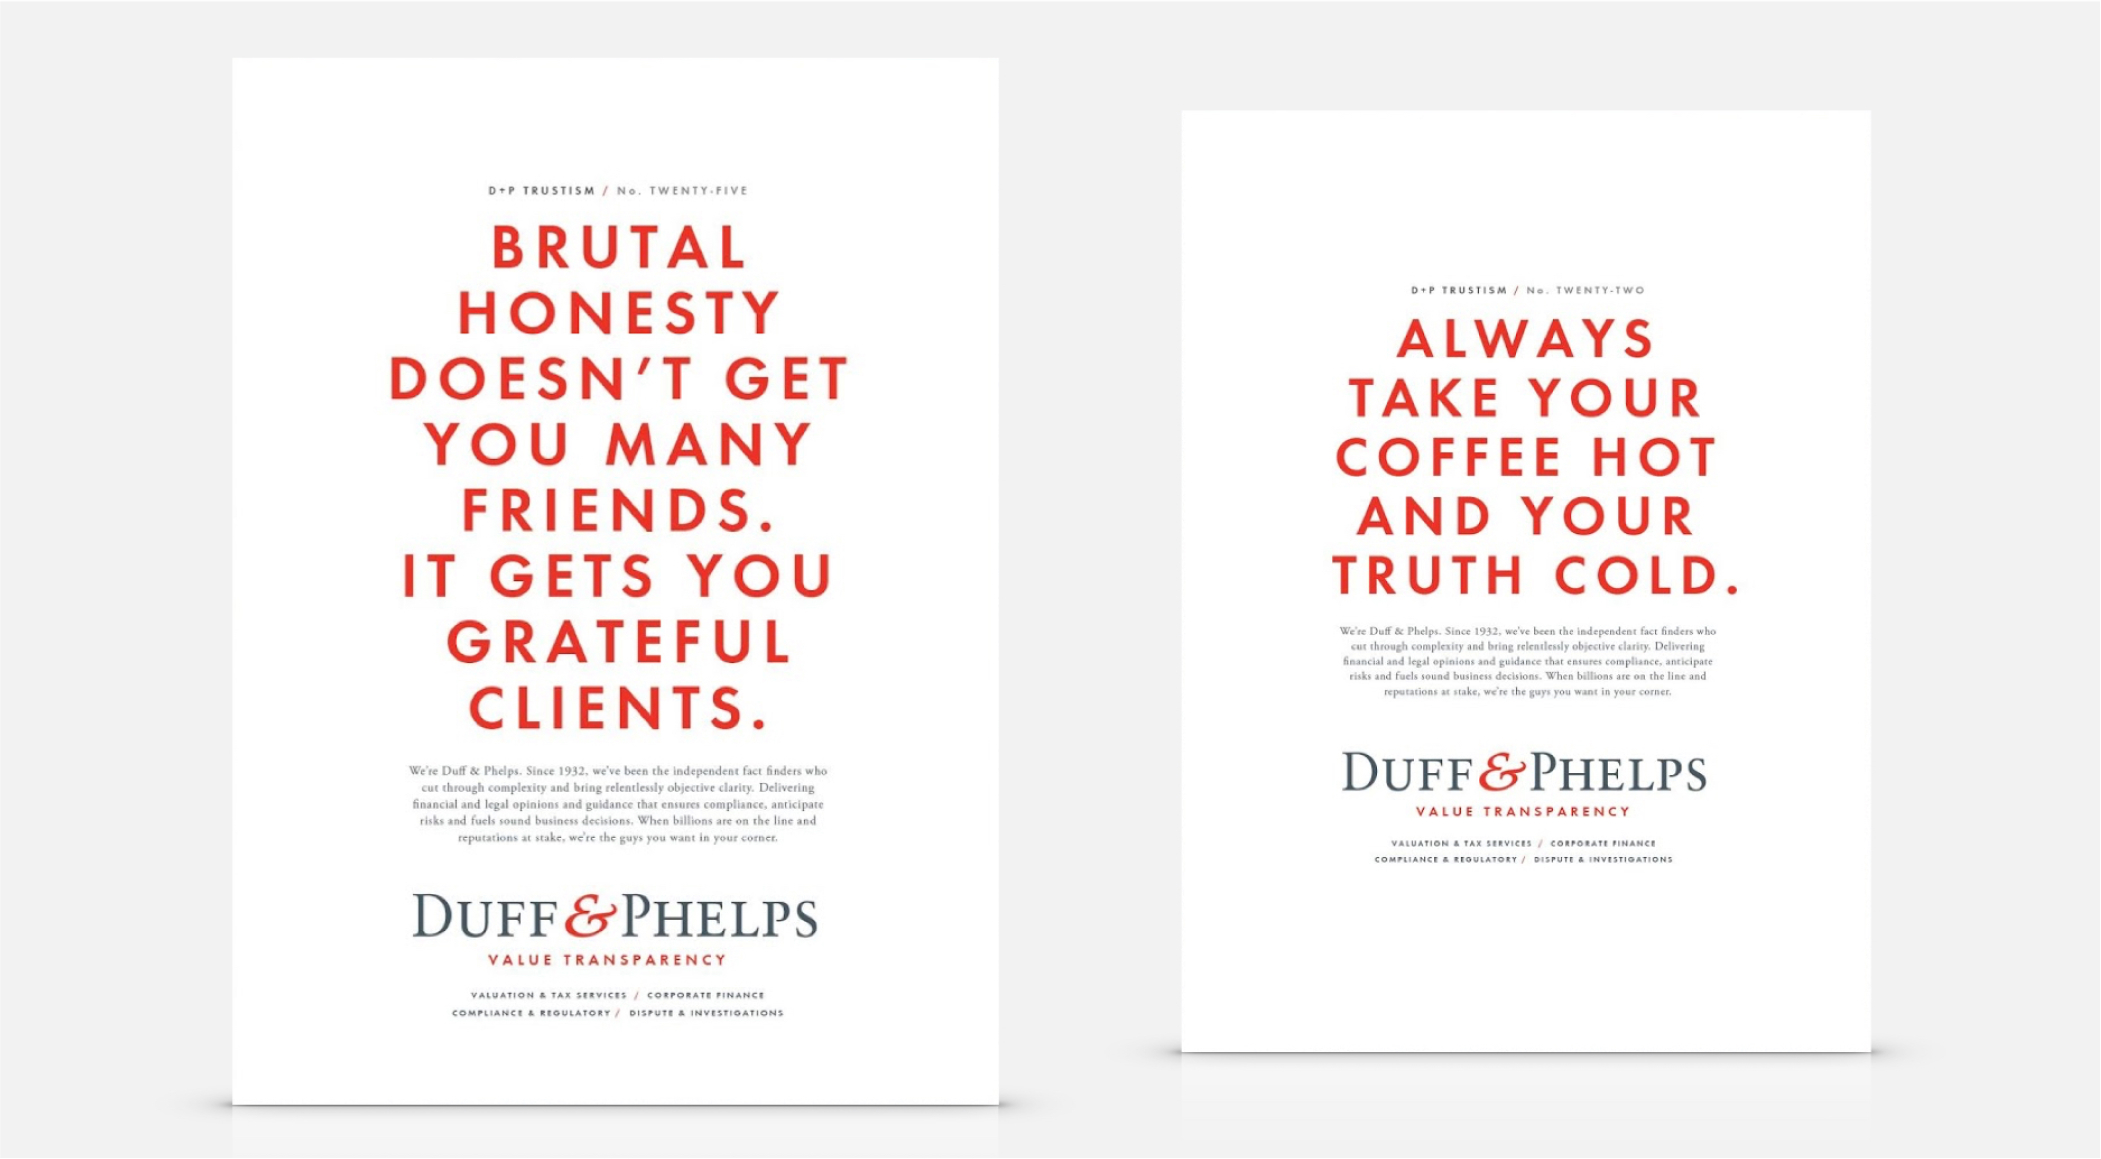 Duff & Phelps Print ads